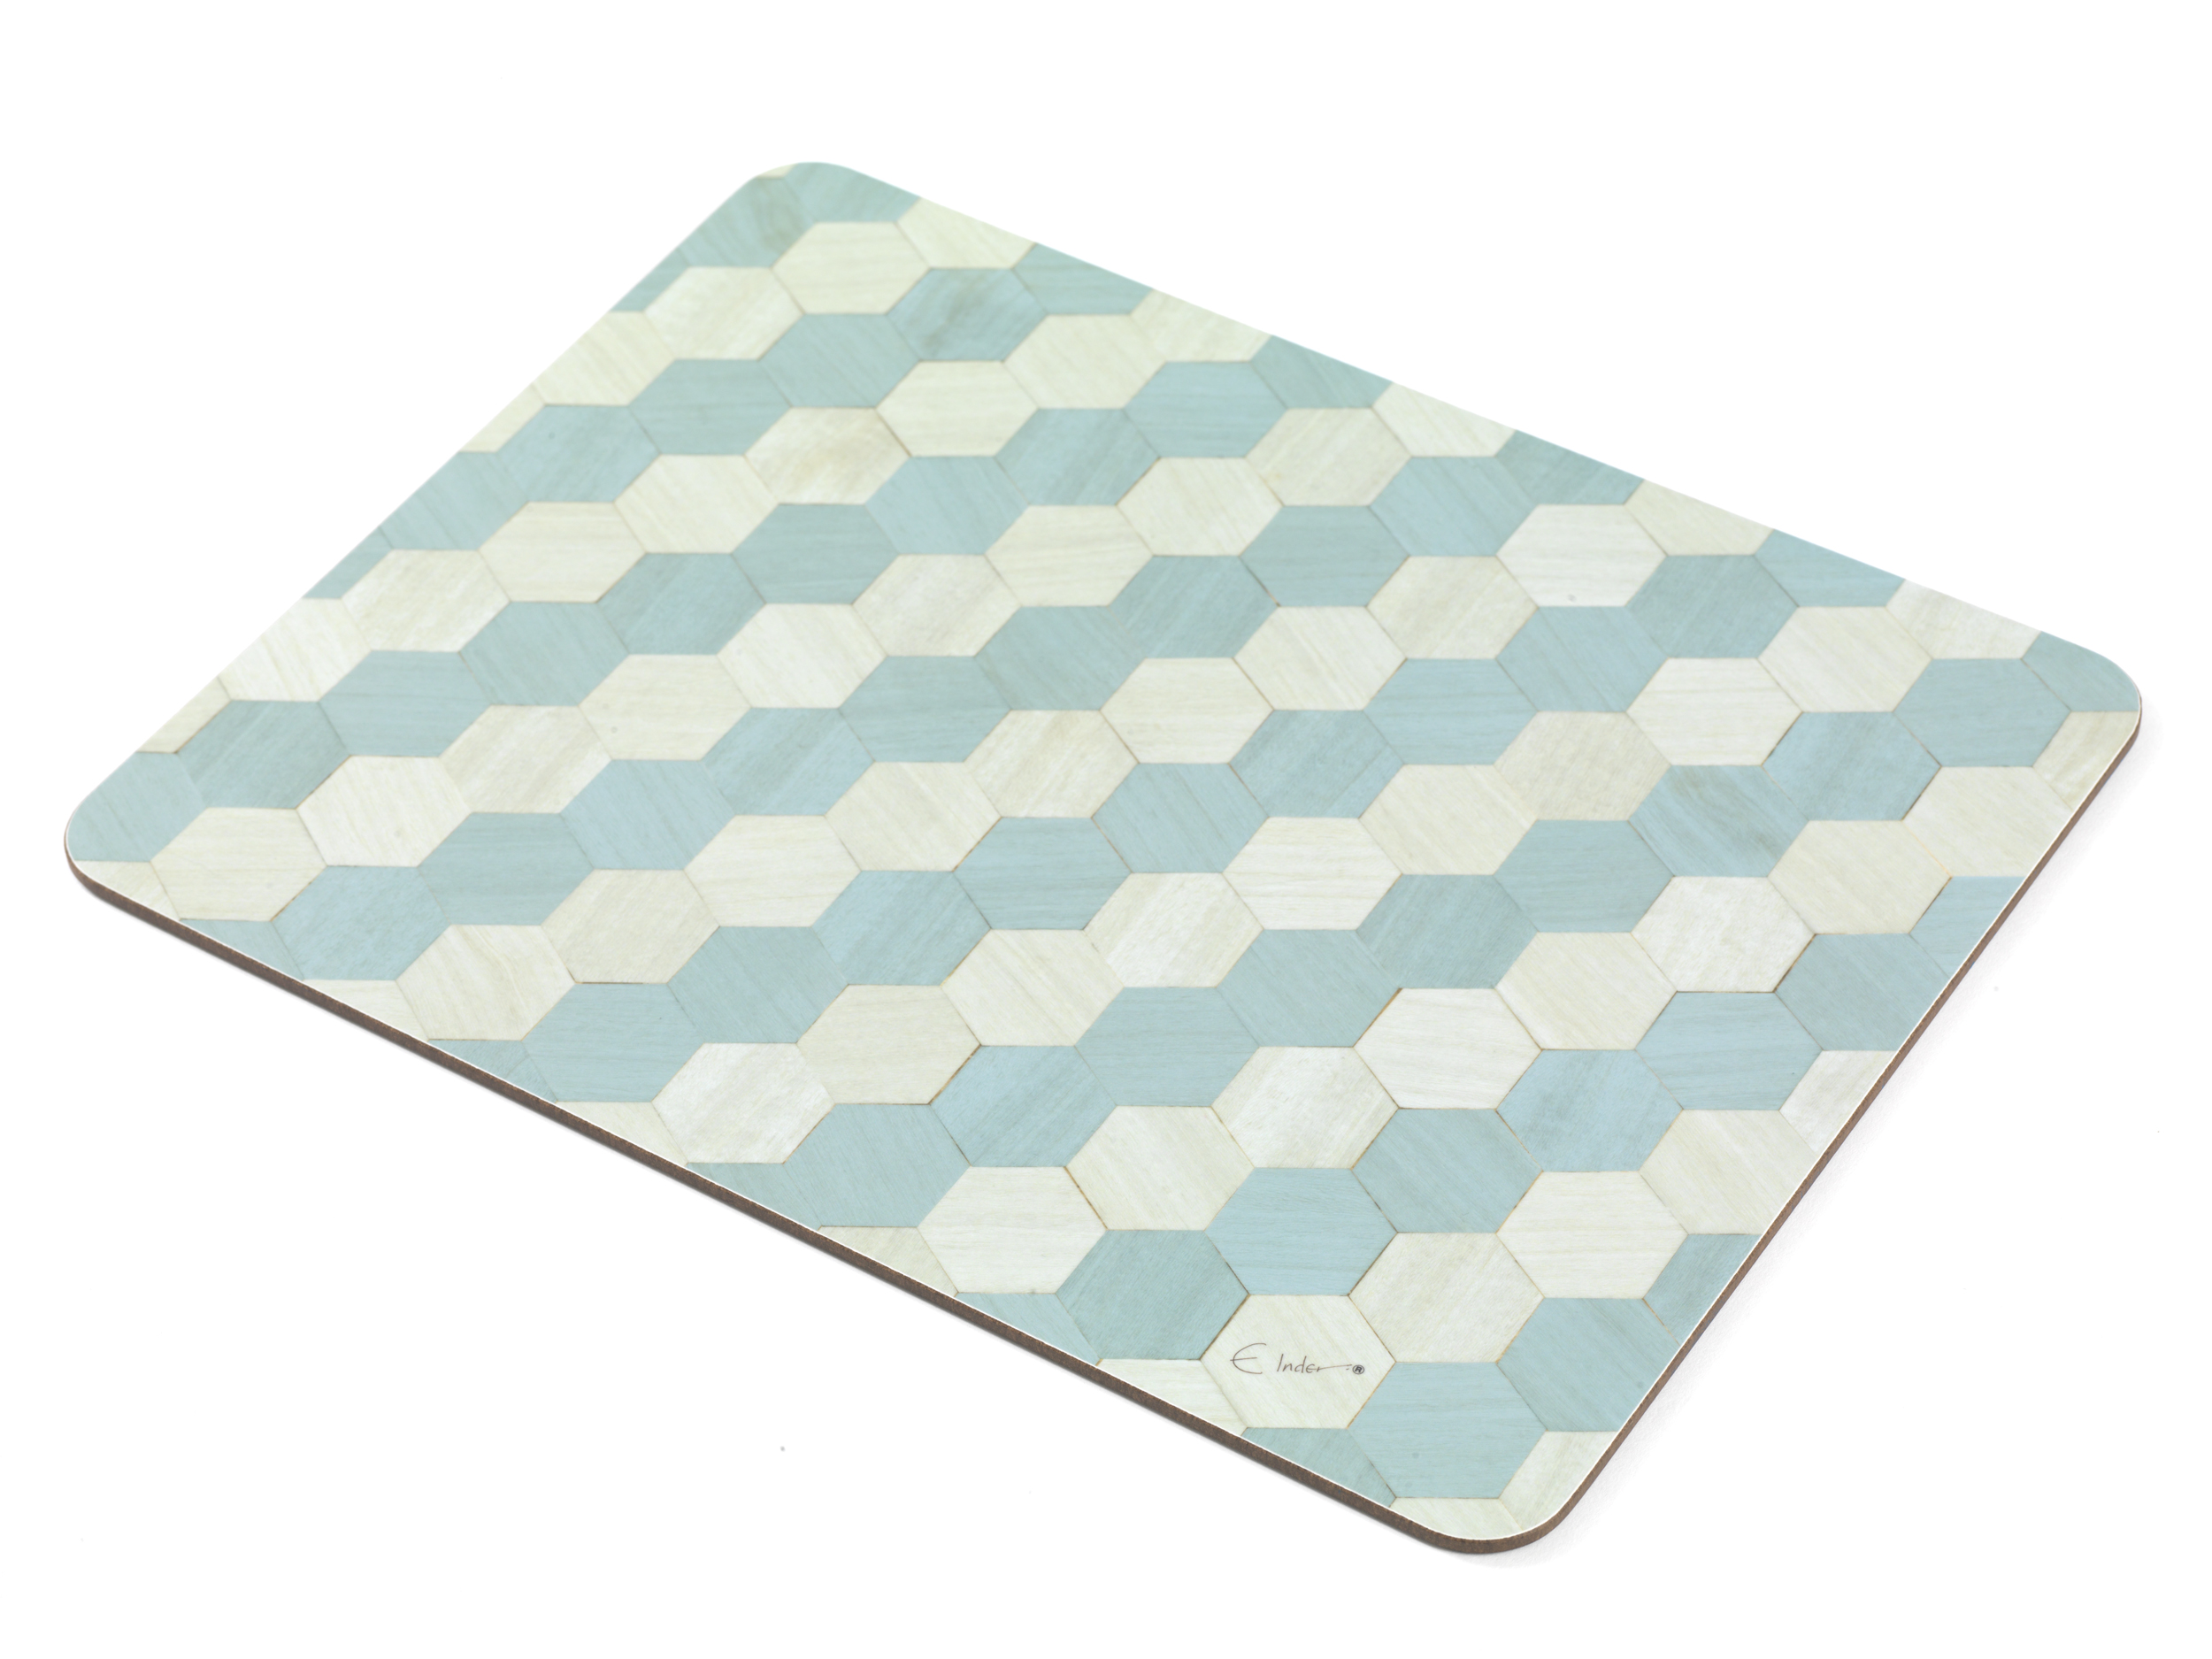 382 x 292 x 4.8mm 2 4 or 6 place mats Large table mats Duck Egg Blue Melamine Heat Resistant 160 degrees Sorrento Range Rectangle